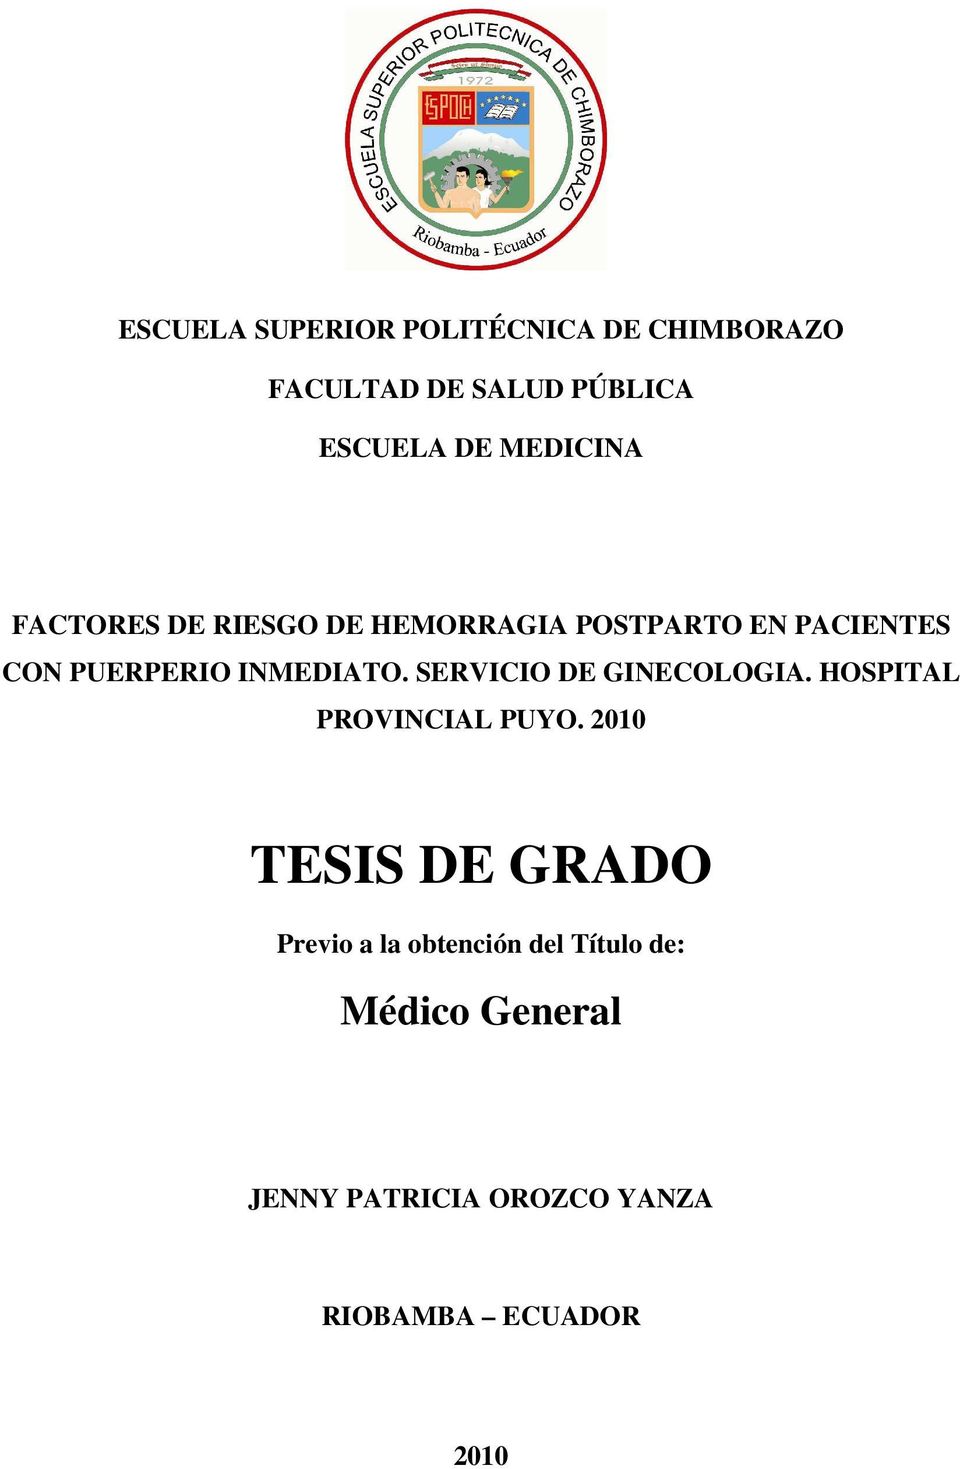 INMEDIATO. SERVICIO DE GINECOLOGIA. HOSPITAL PROVINCIAL PUYO.